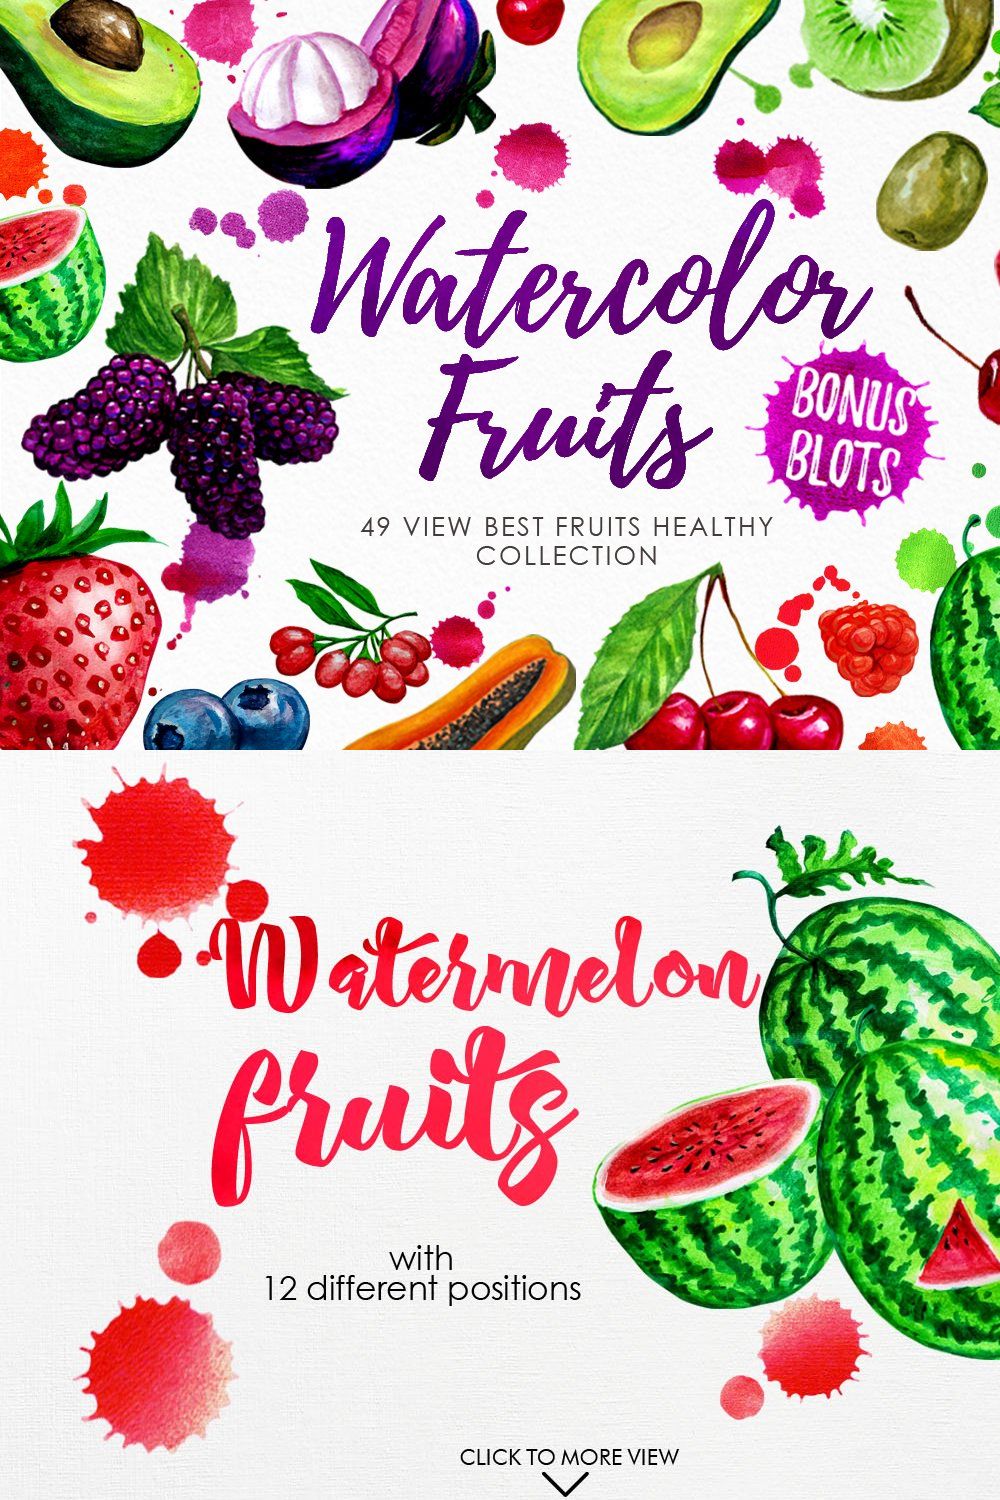 Watercolor Fruits Vol. 3 pinterest preview image.